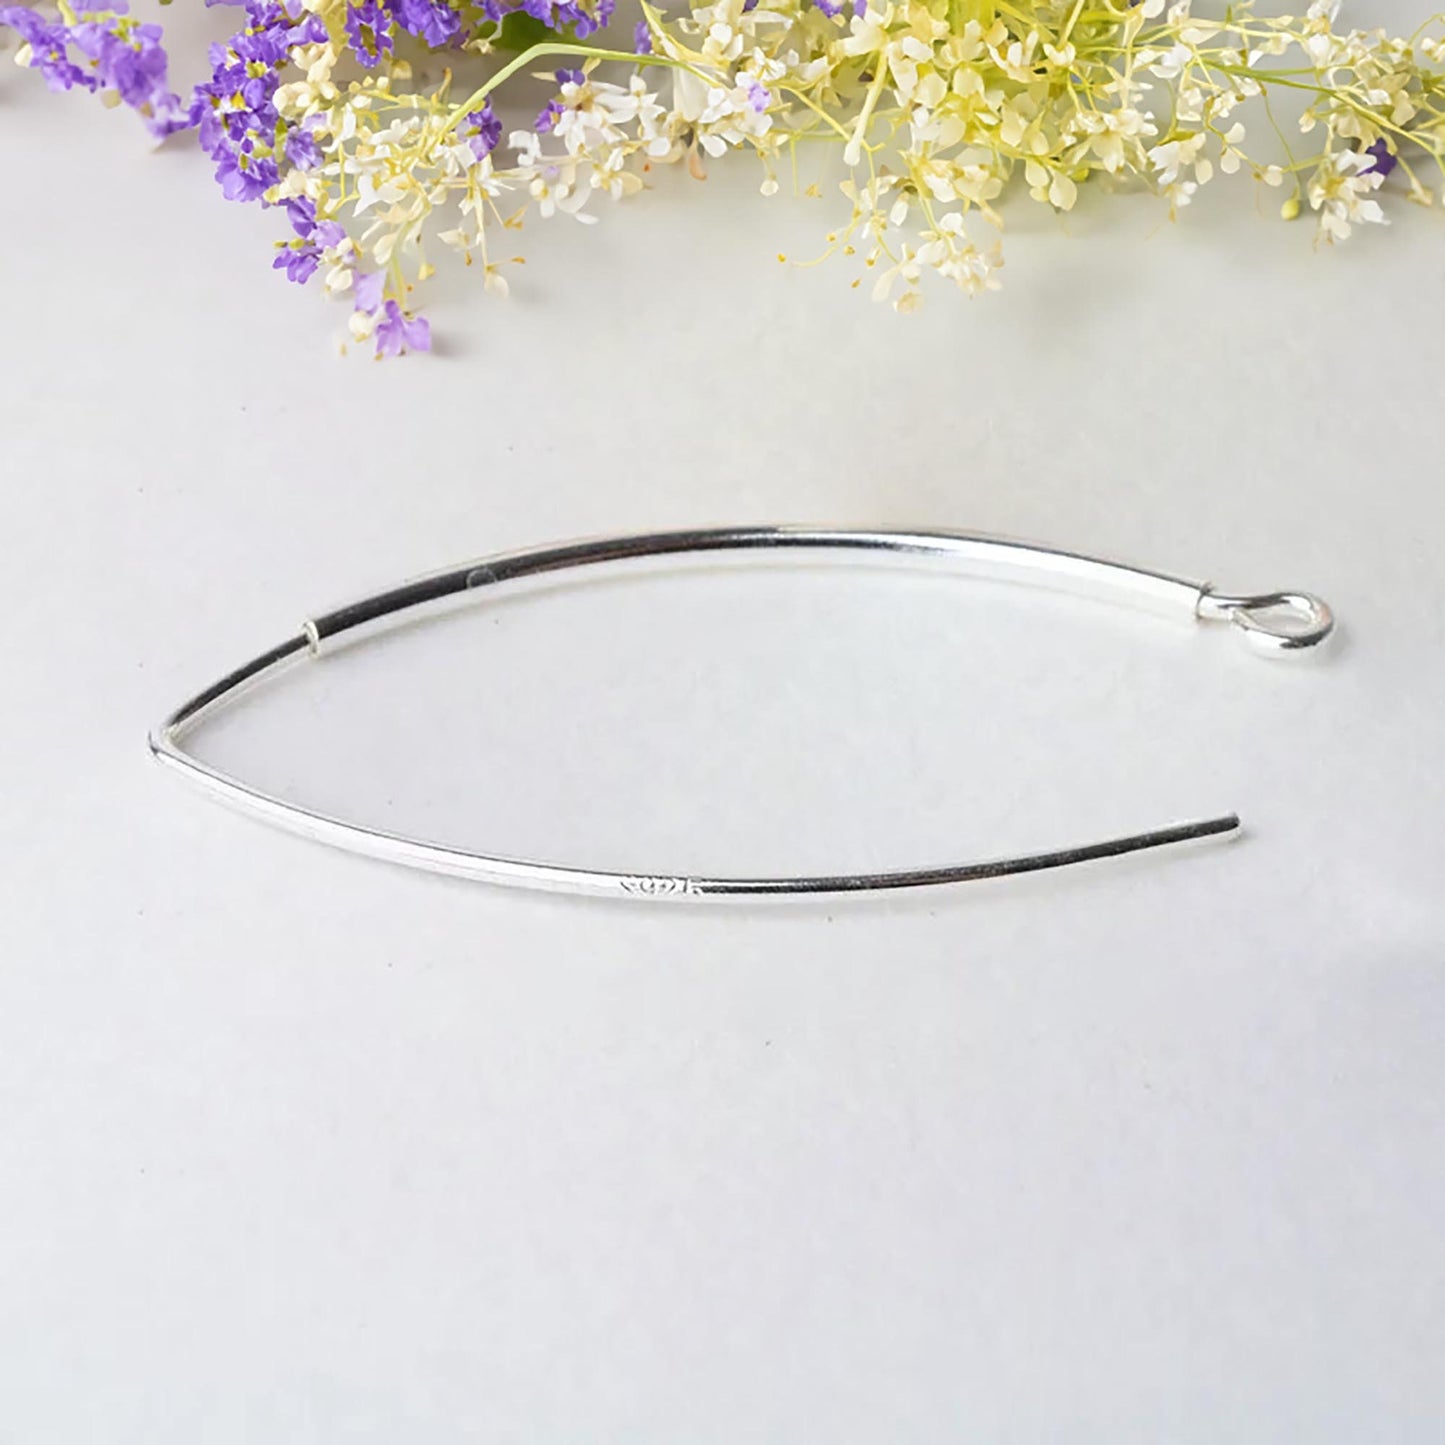 Solid 925 Sterling Silver Earring Hooks, Hypoallergenic Ear Wires with Loop, Nickel Free Fishhook, Wholesale Jewelry DIY Findings Components